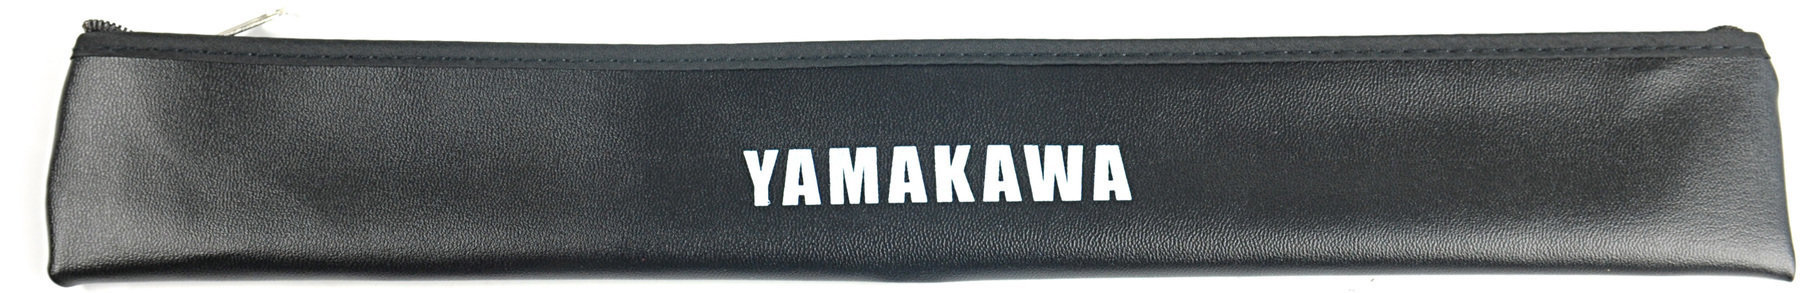 Zaščitna embalaža za kljunasto flavto Yamakawa RB-S2 Zaščitna embalaža za kljunasto flavto